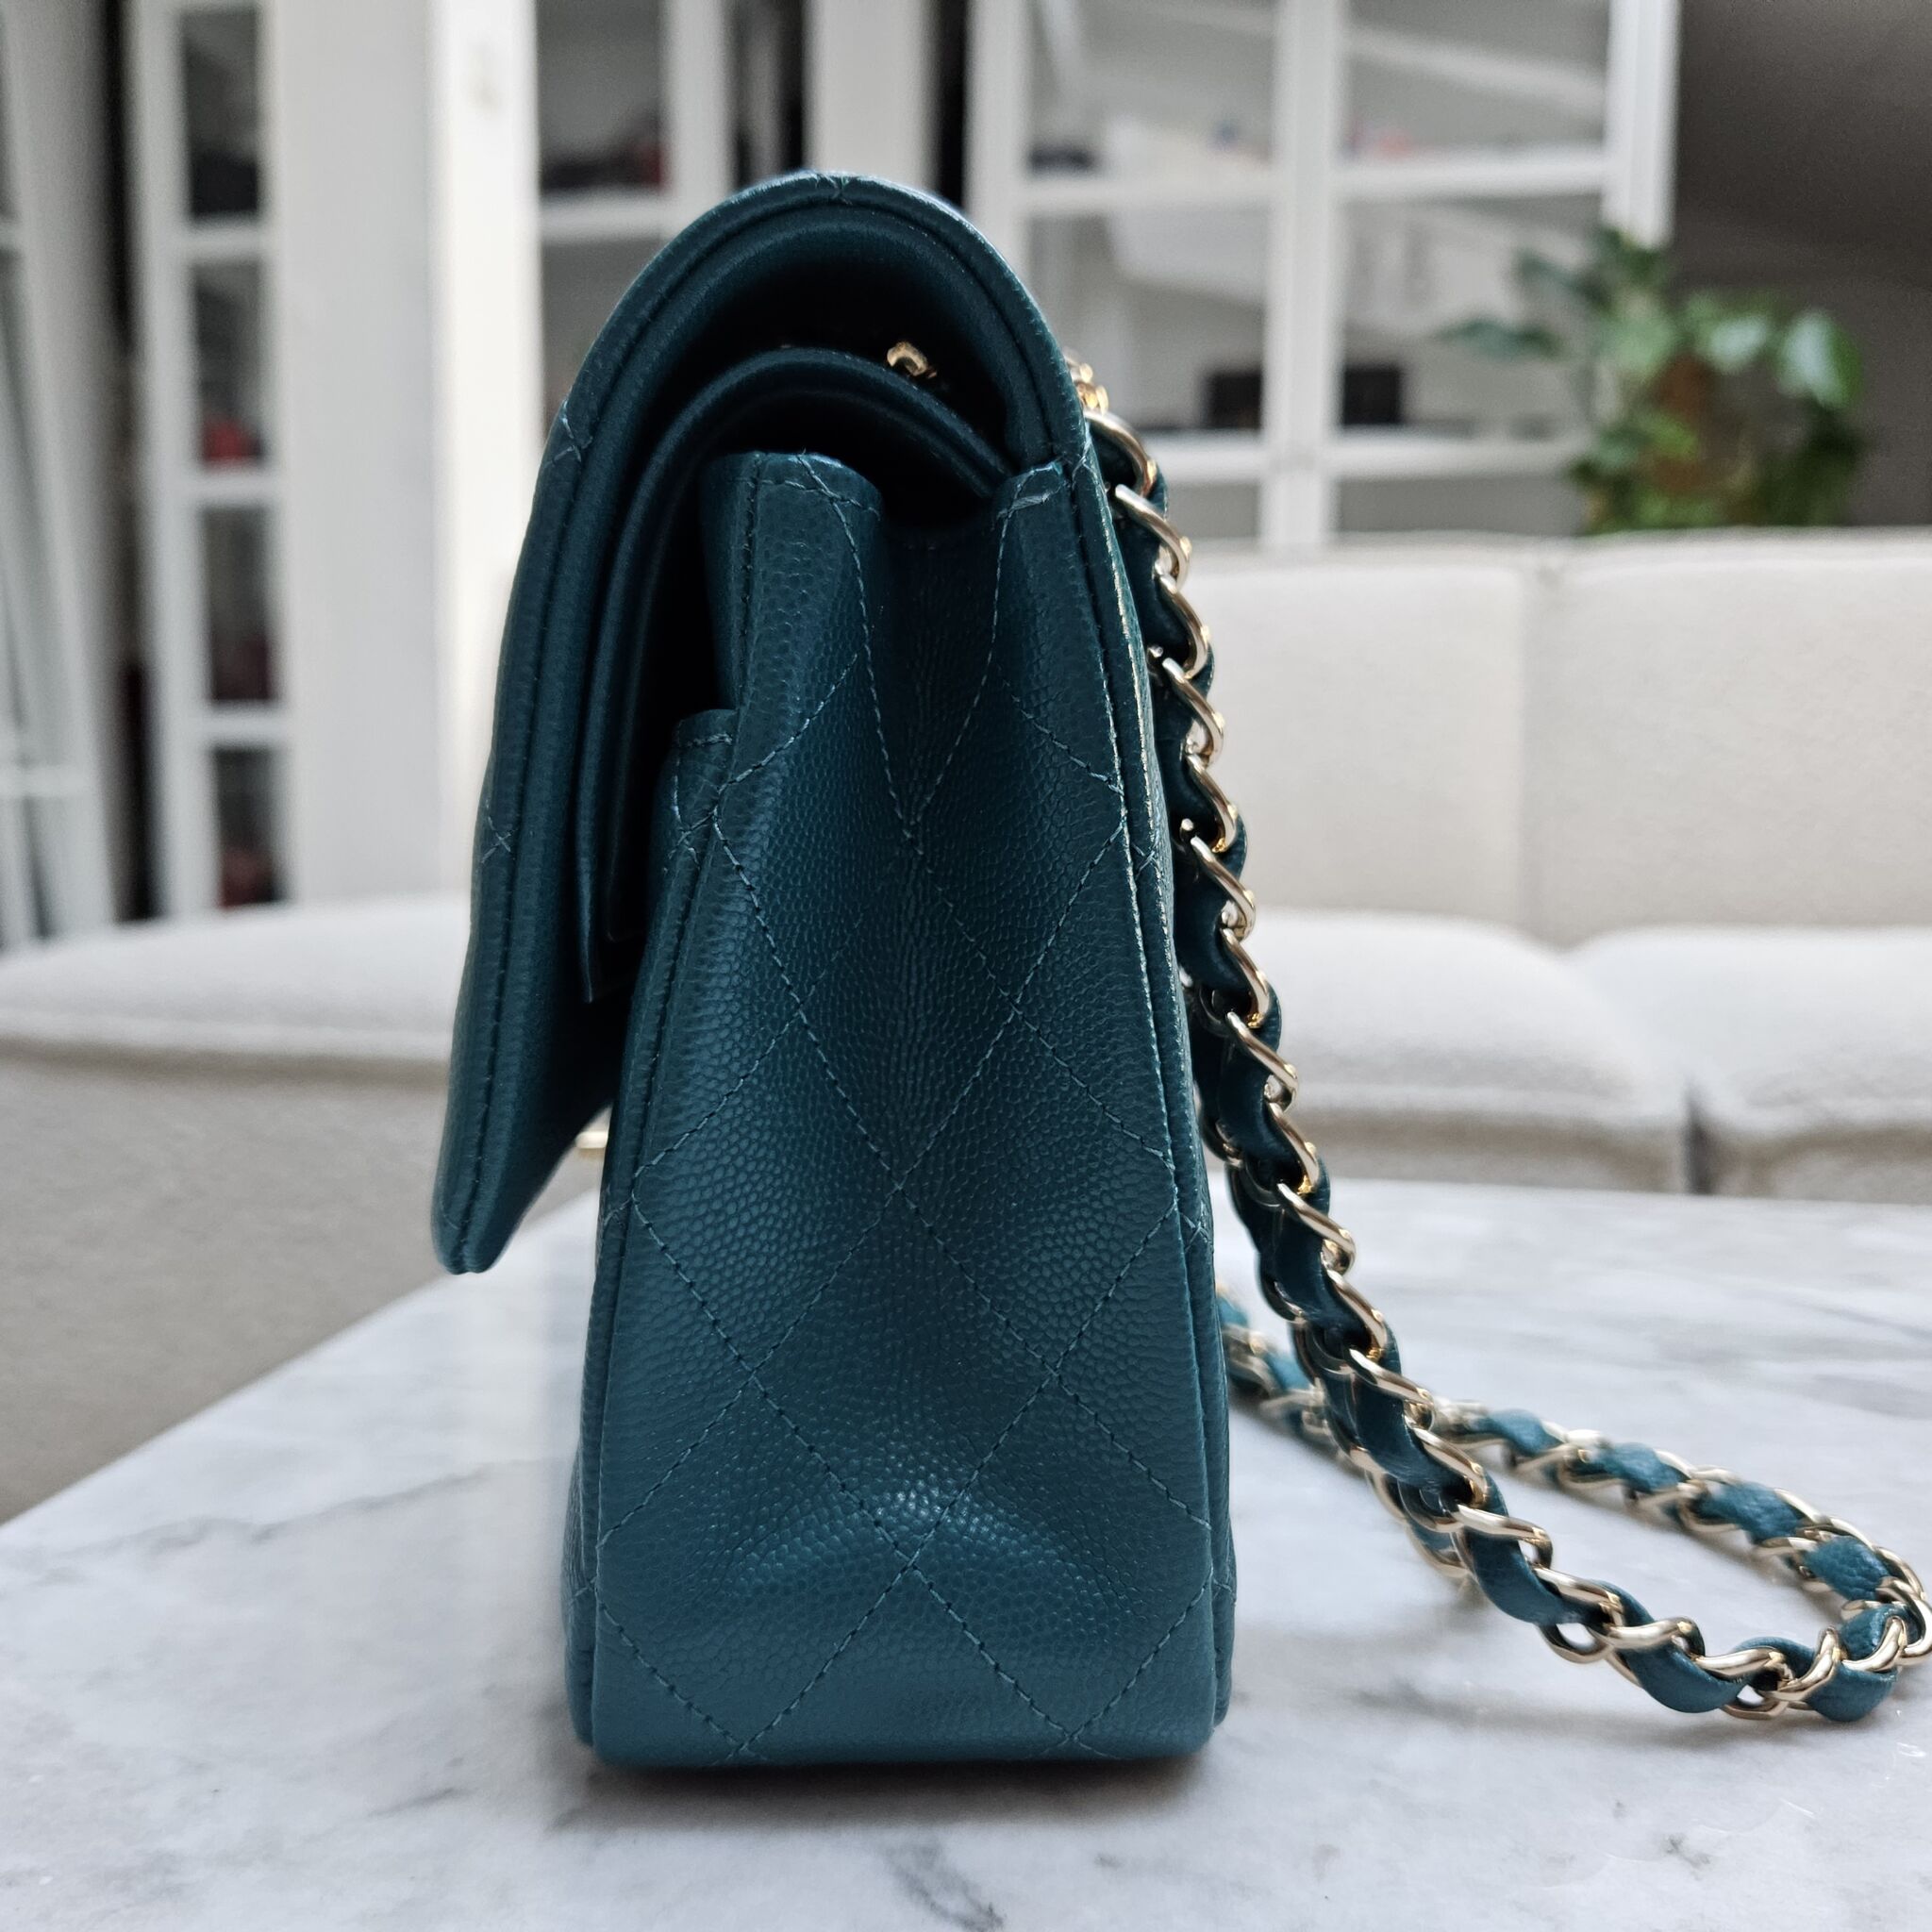 Emerald green Chanel  Chanel green bag, Chanel bag classic, Chanel bag